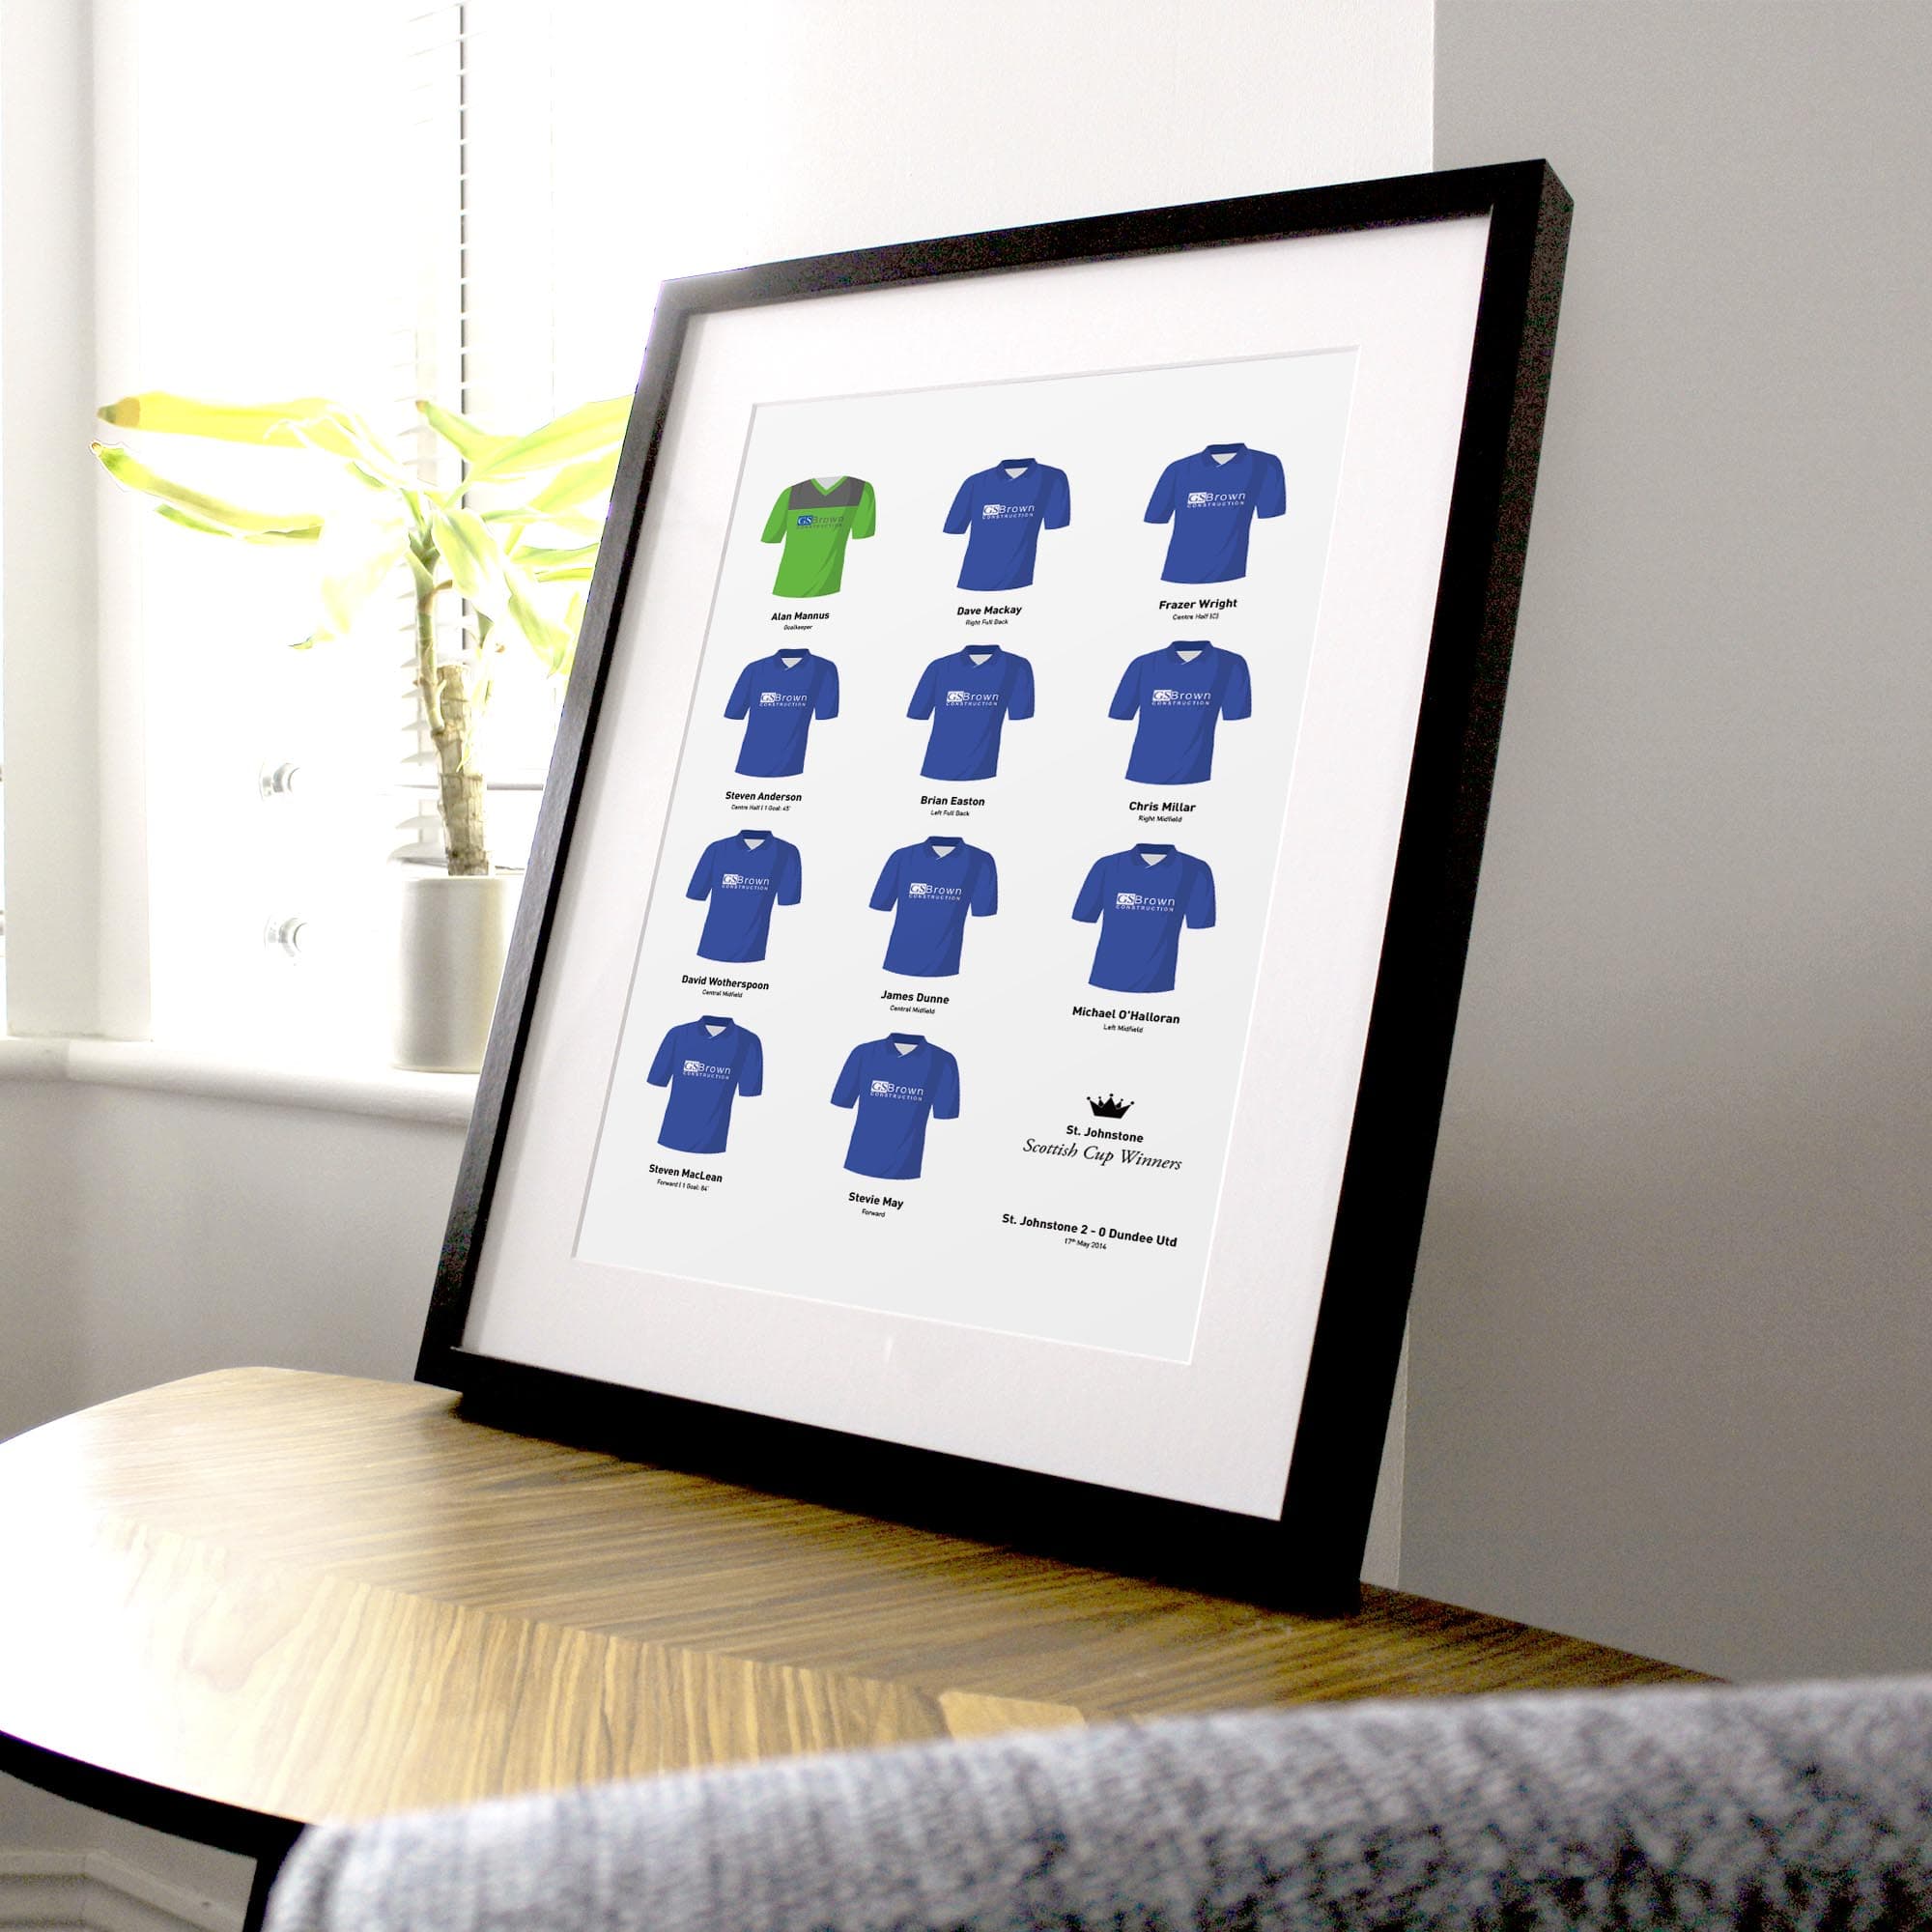 St Johnstone 2014 Scottish Cup Winners Football Team Print Good Team On Paper